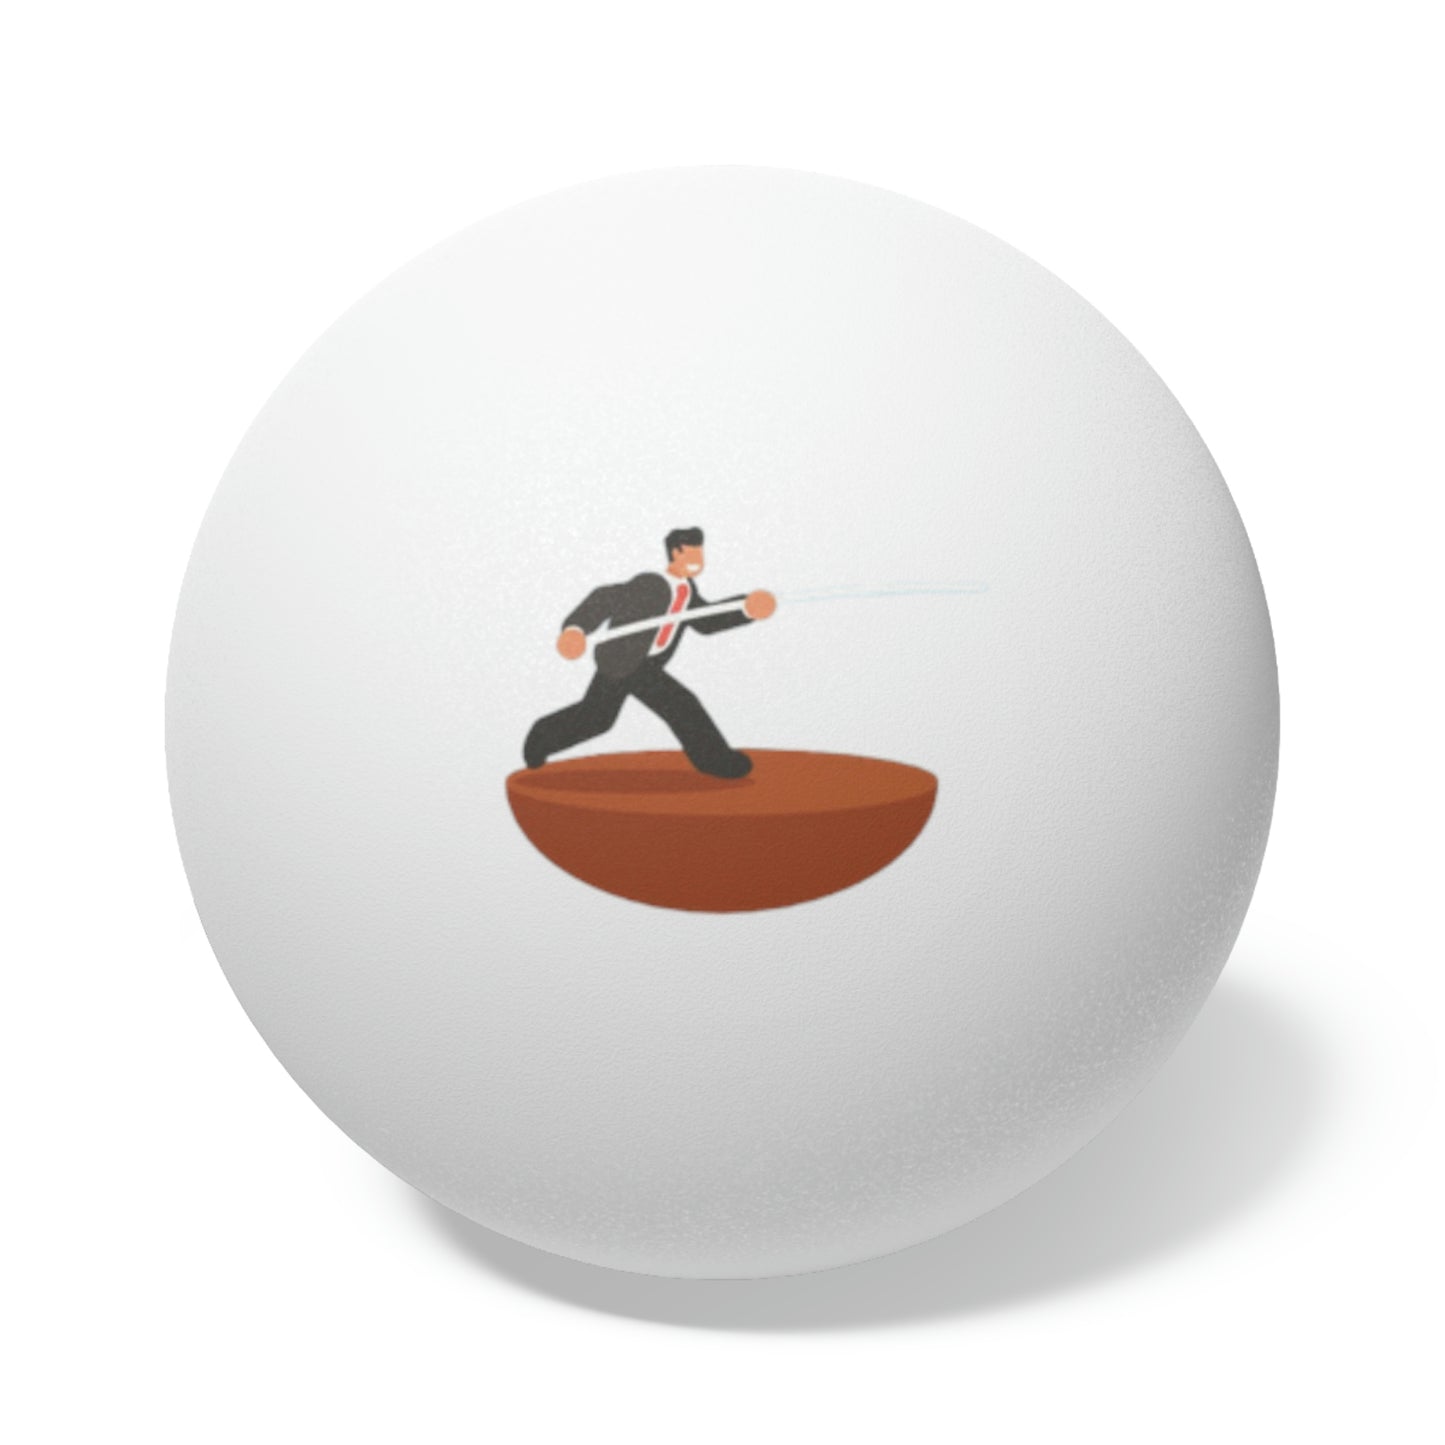 Javelin Business Man Ping Pong Balls, 6 pcs